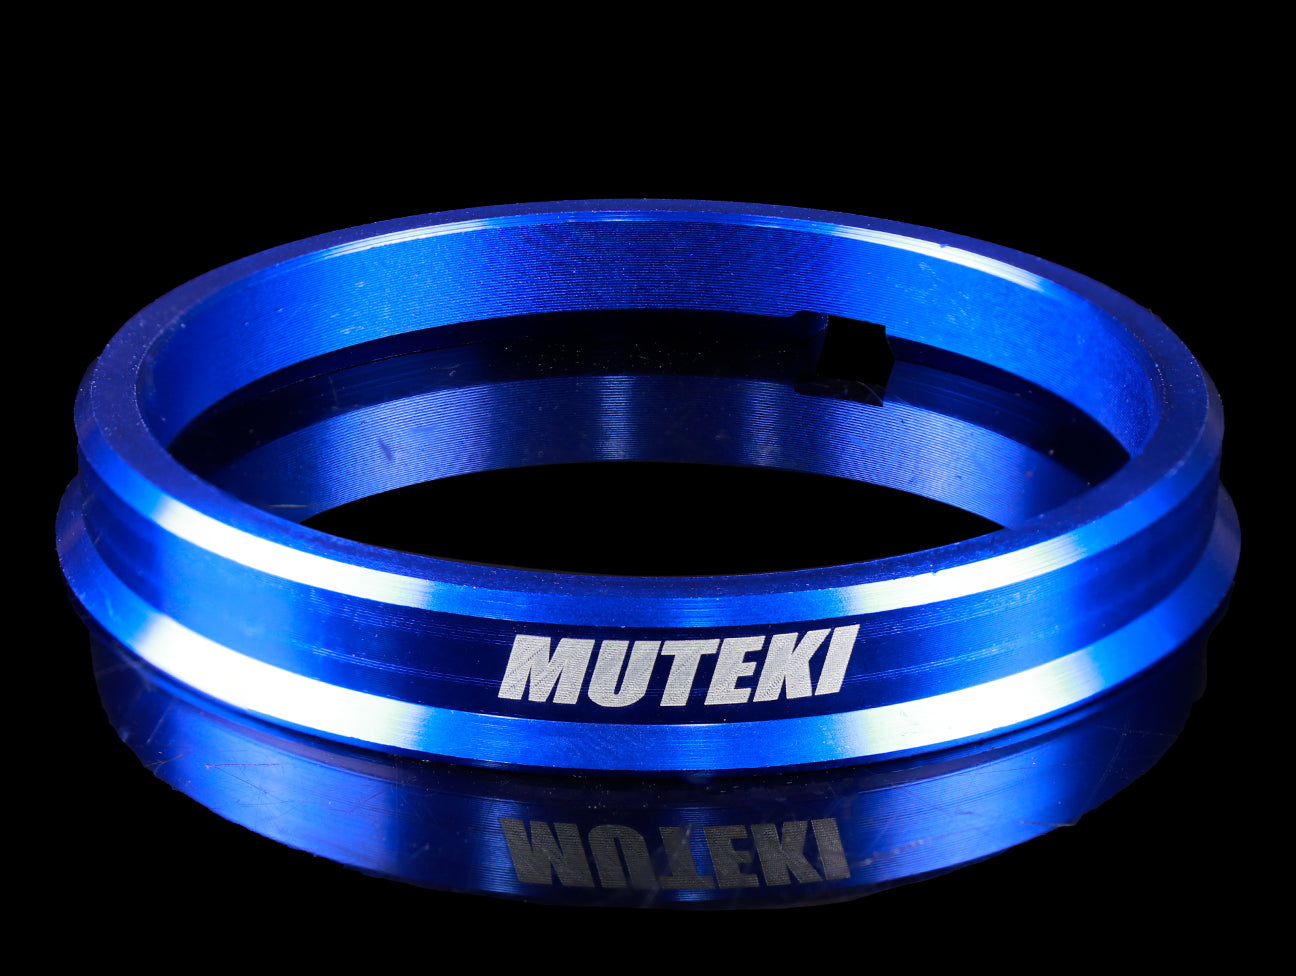 Muteki Hub Ring Set - Blue Anodized